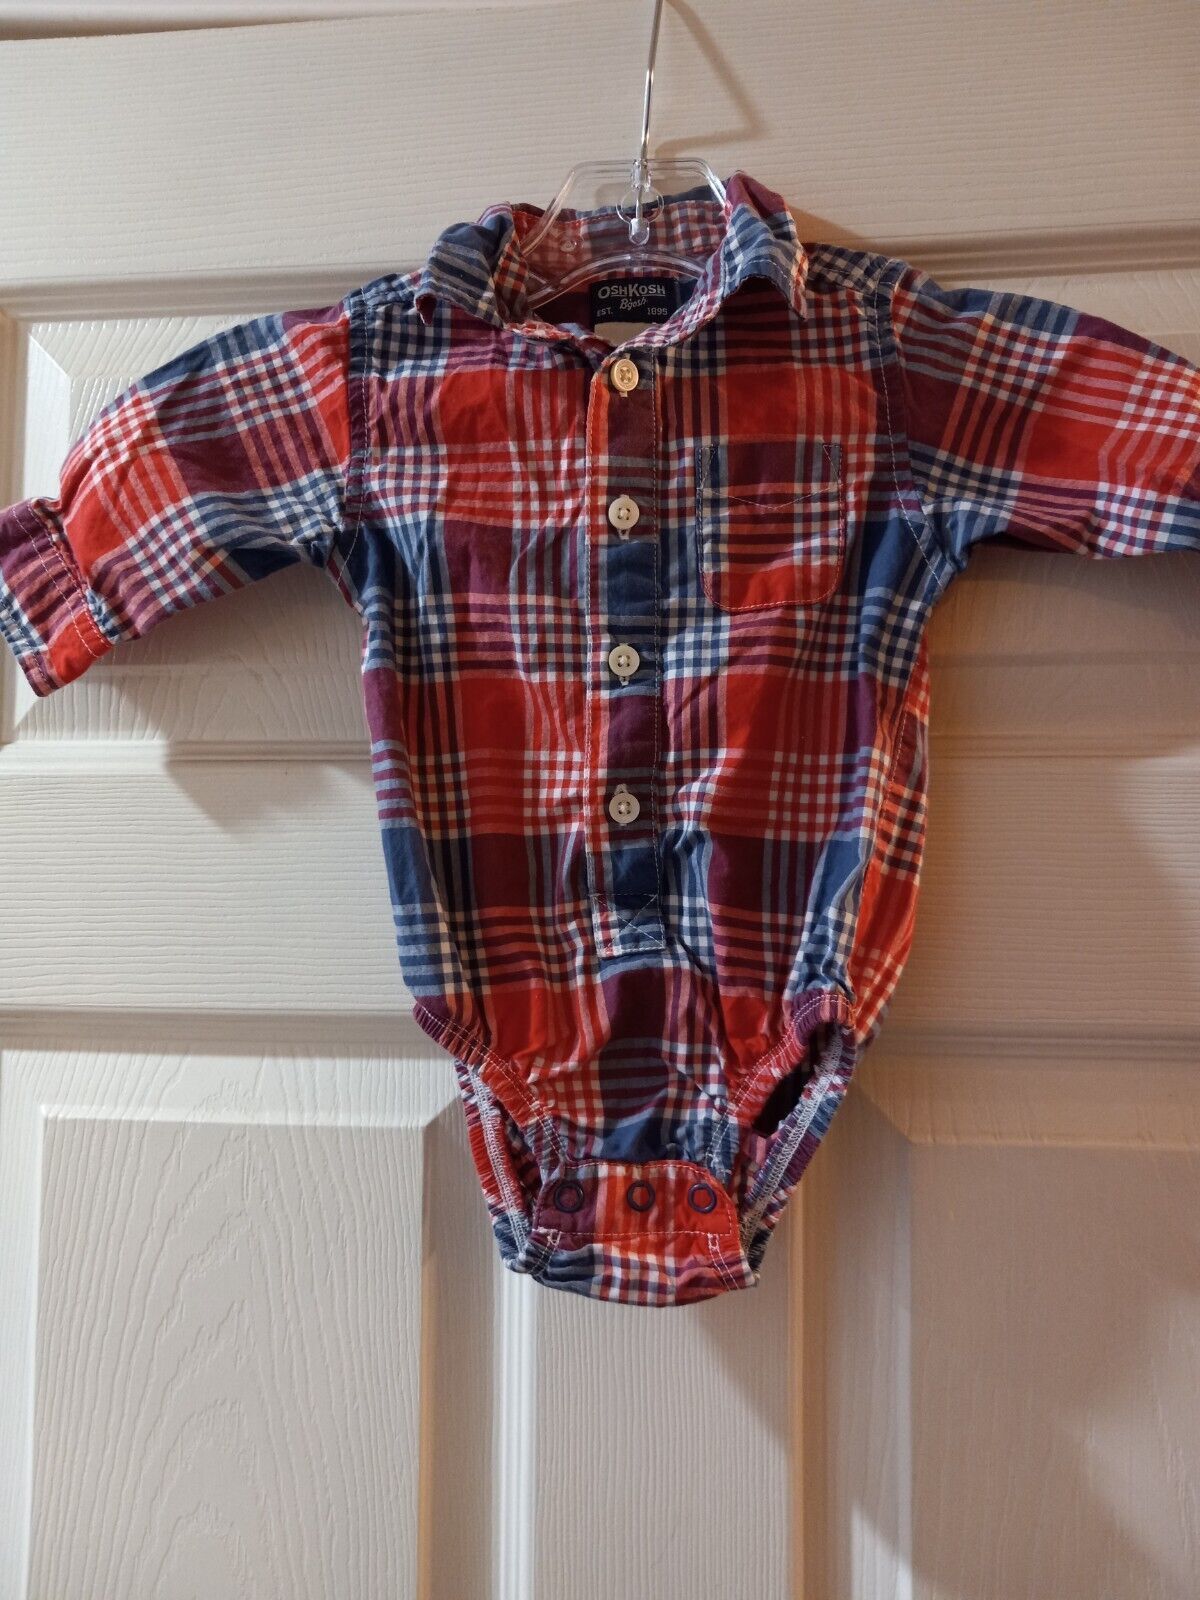 Osh Kosh Bgosh Baby 6 Months Button Up Shirt - $5.97